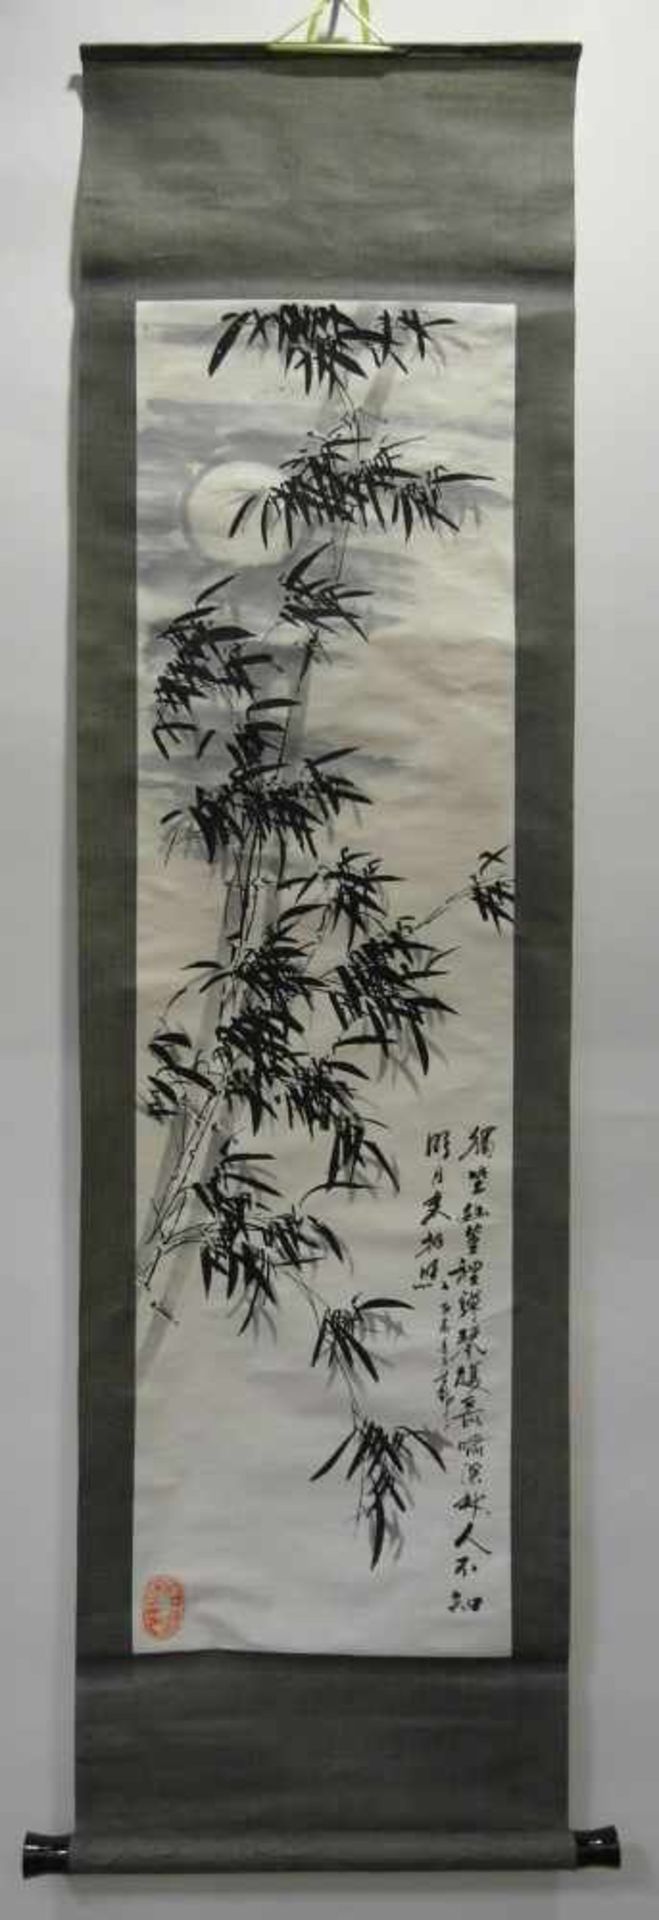 LIU, HAISU1896 Shangzhou - 1994. Bamboo. China. 1941 resp. 1943. Ink on paper. 136x33.5cm. . - Image 3 of 3